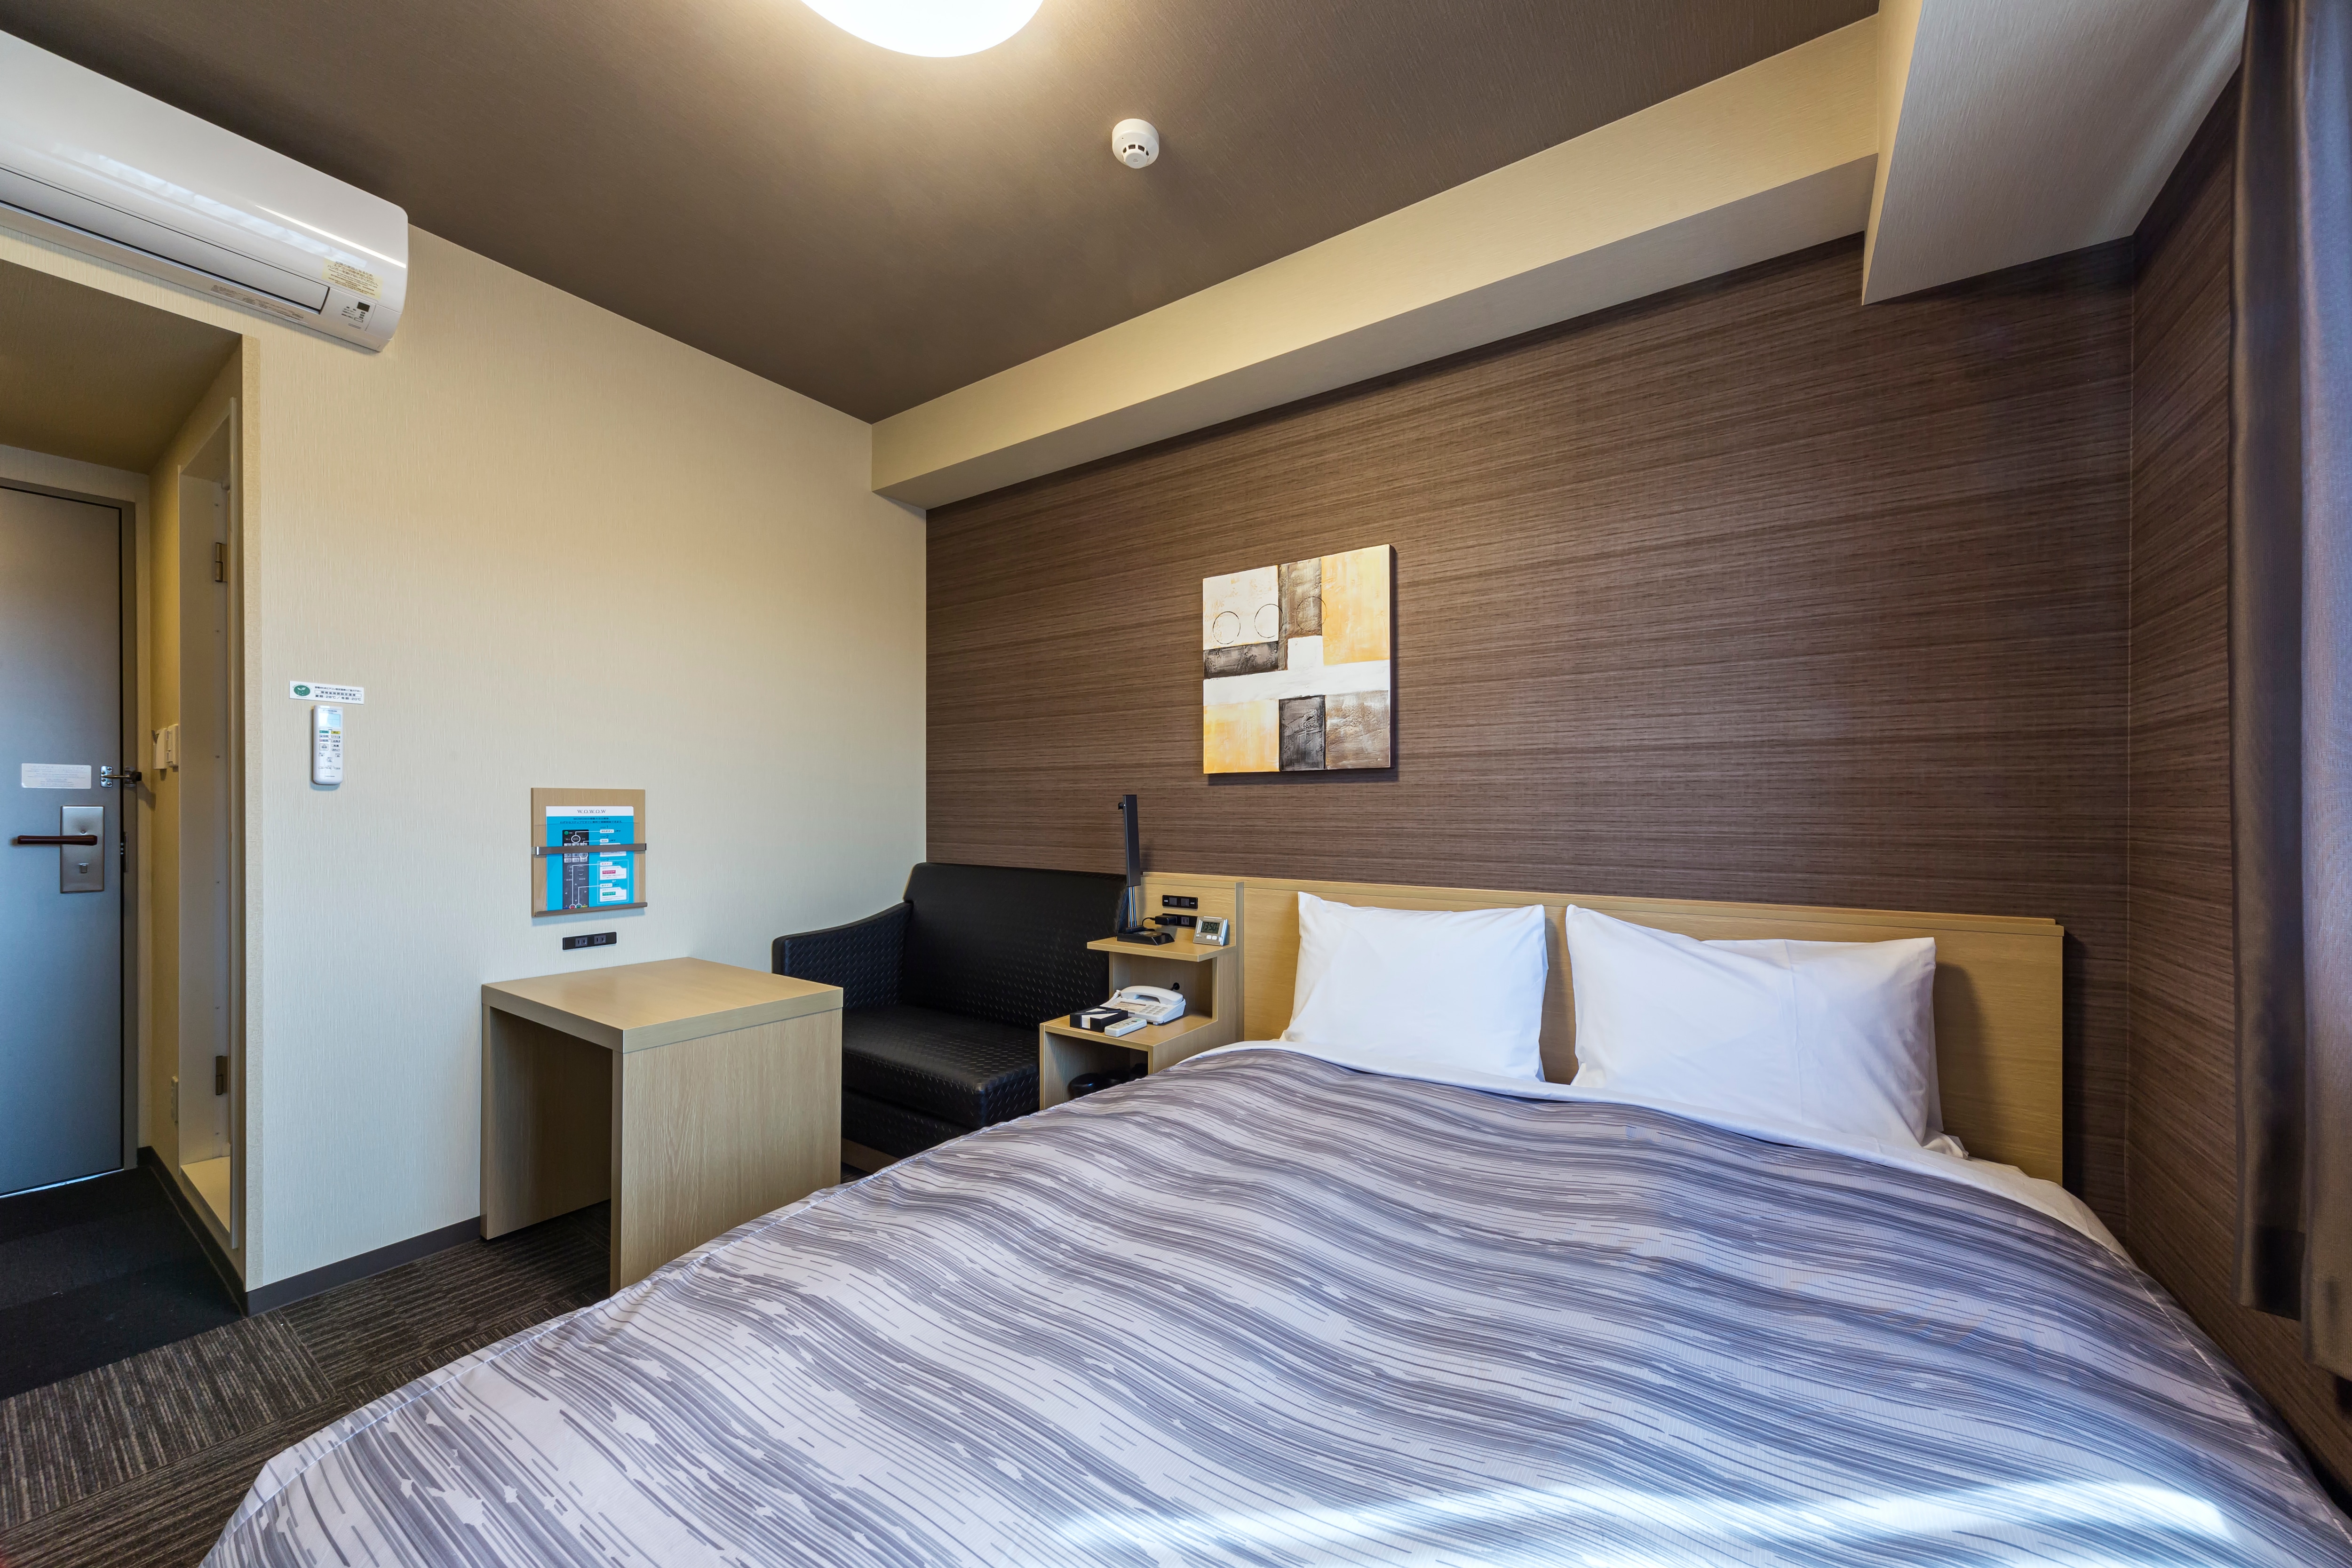 [Guest room] Comfort semi-double room 14 square meters, bed width 140 cm